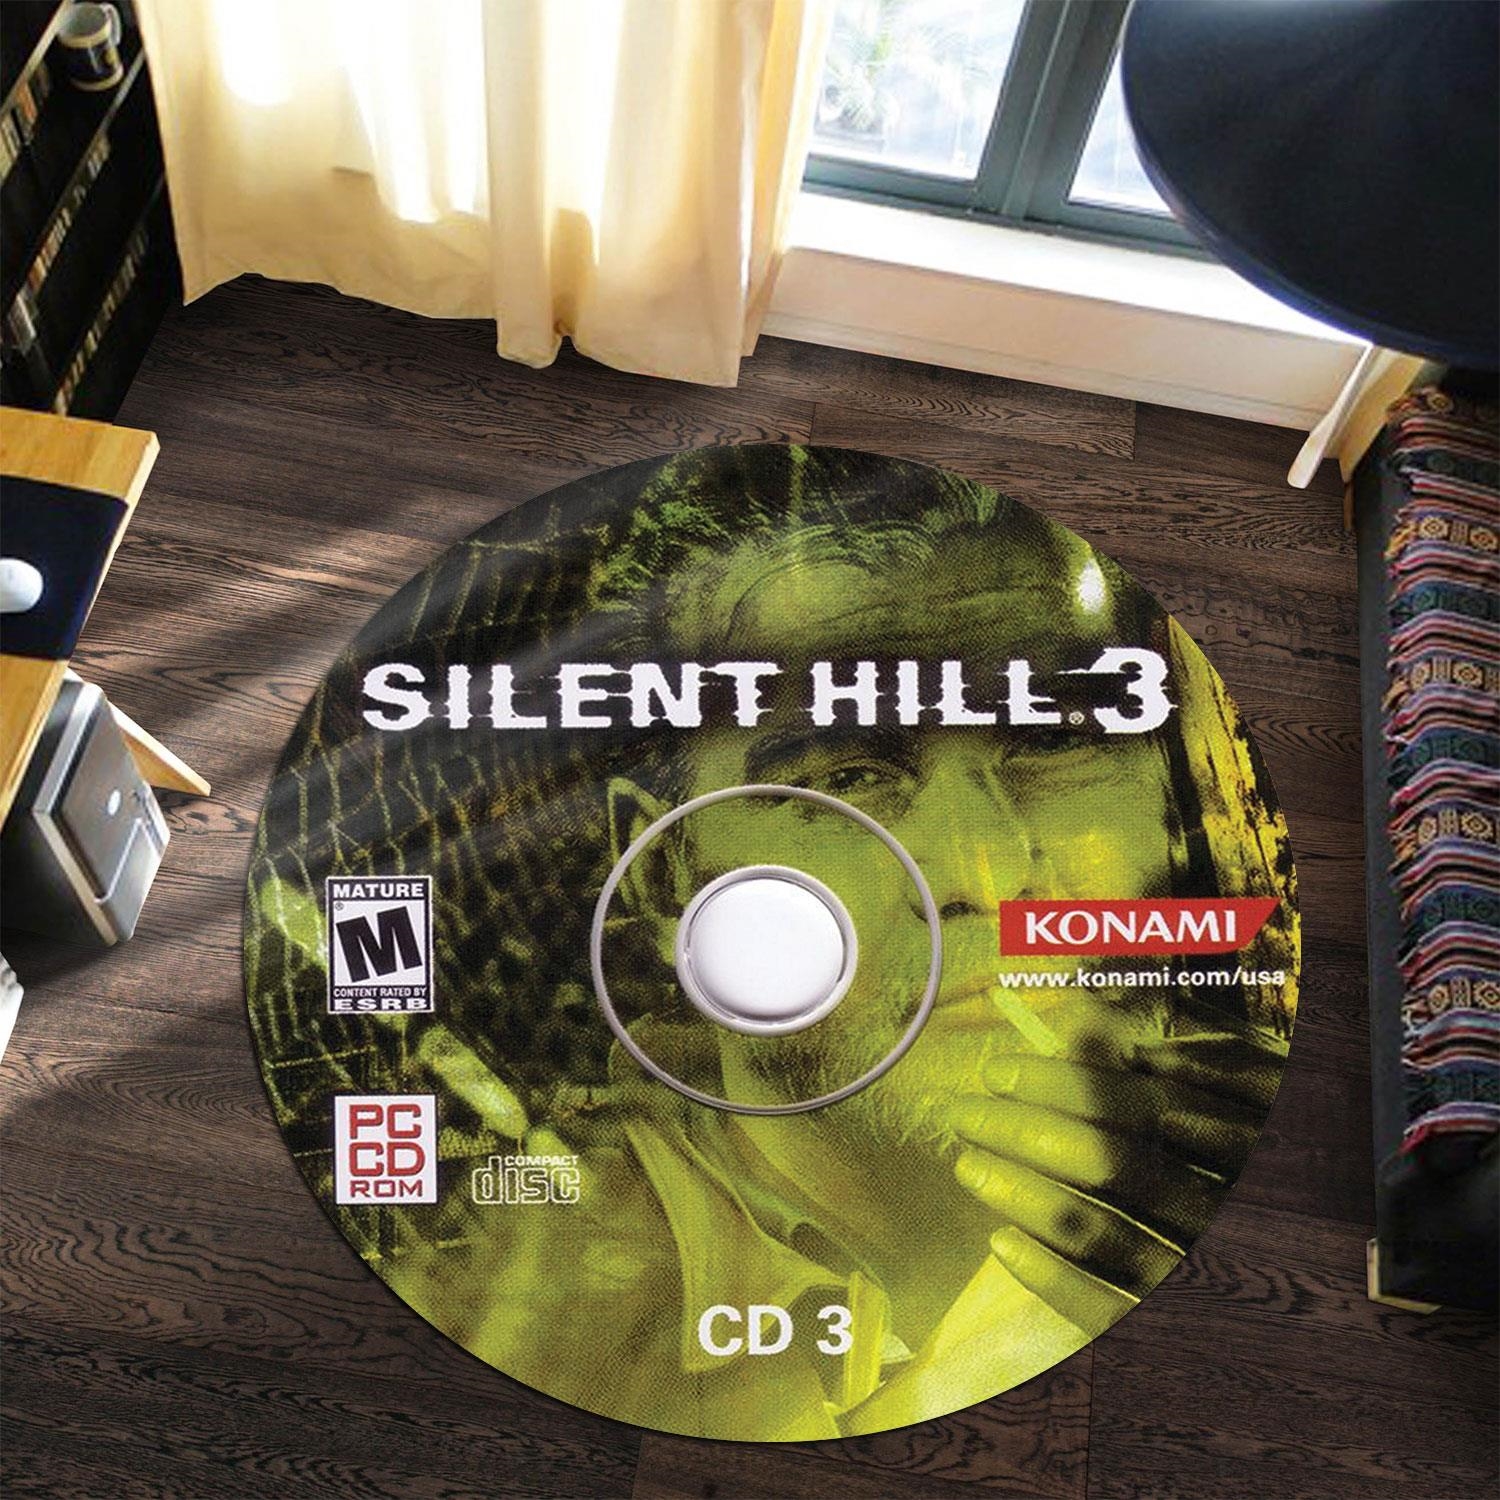 Silent Hill 3 Cd 2 Round Rug Carpet